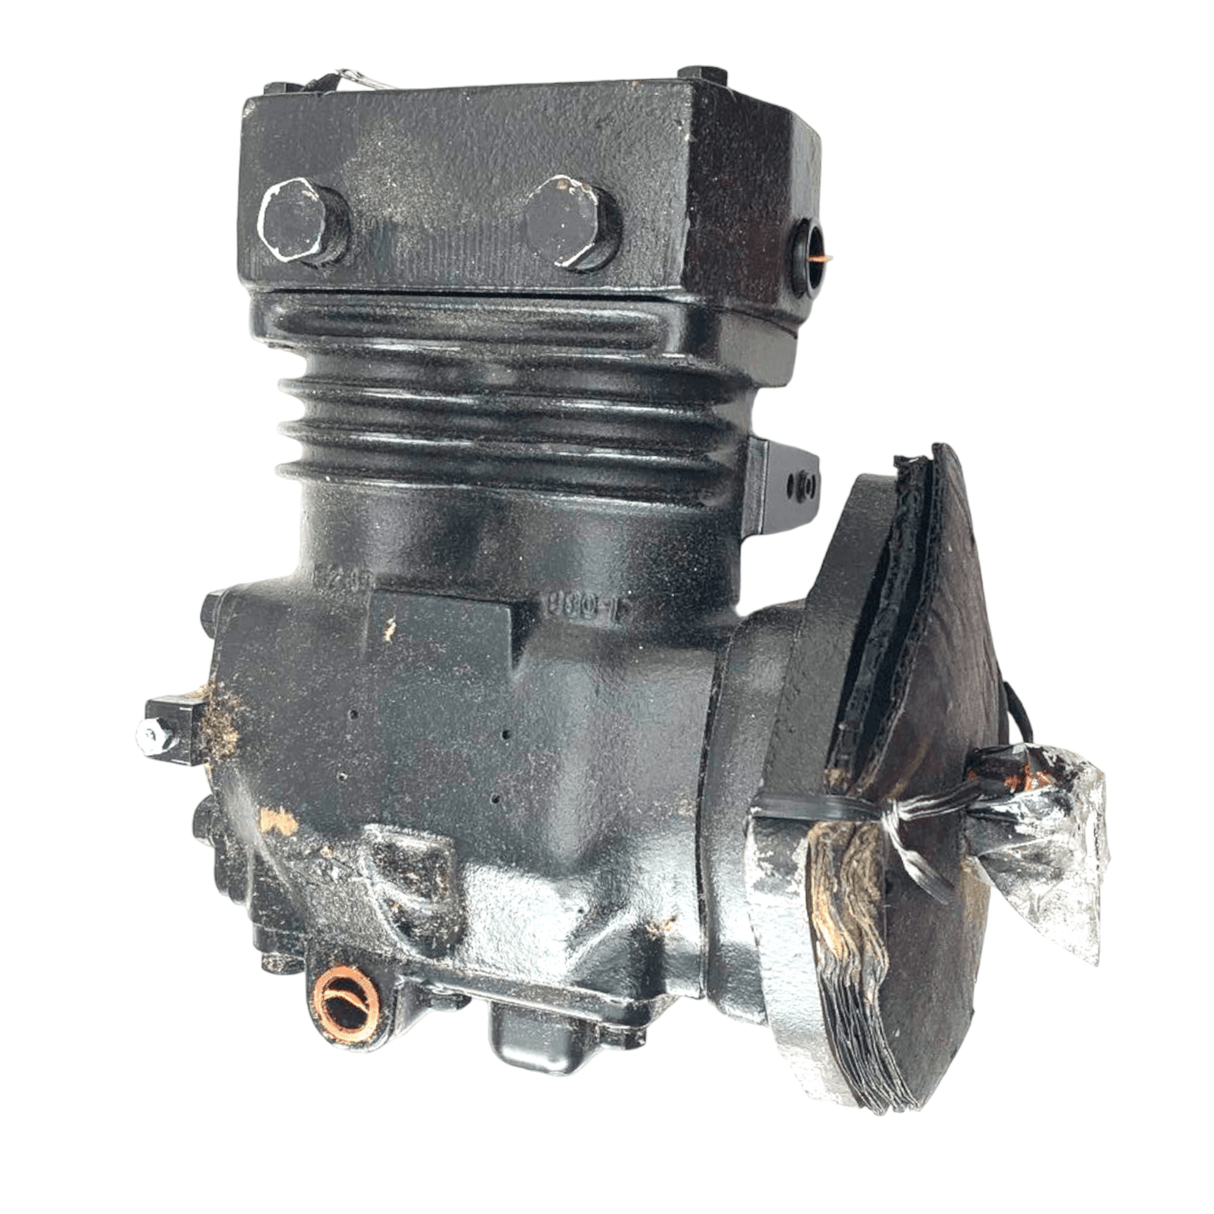 0R2895 Genuine Cat Air Compressor TF-501.